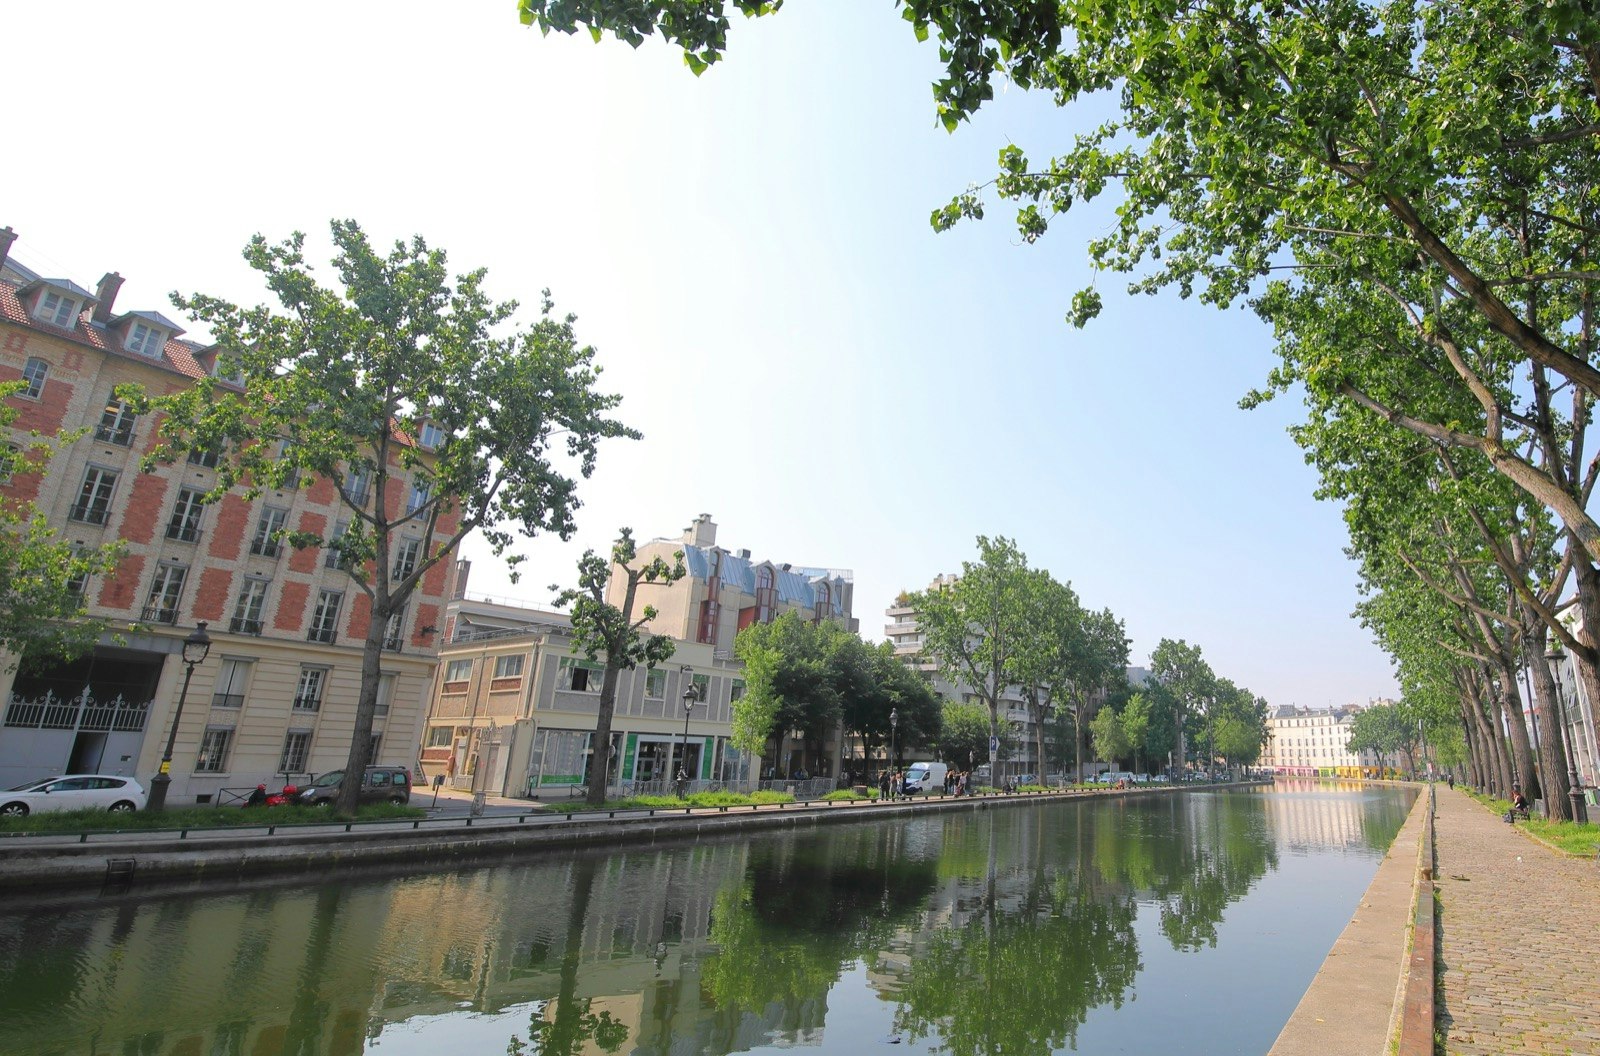 The Canal St-Martin meanders through a Paris neighborhood